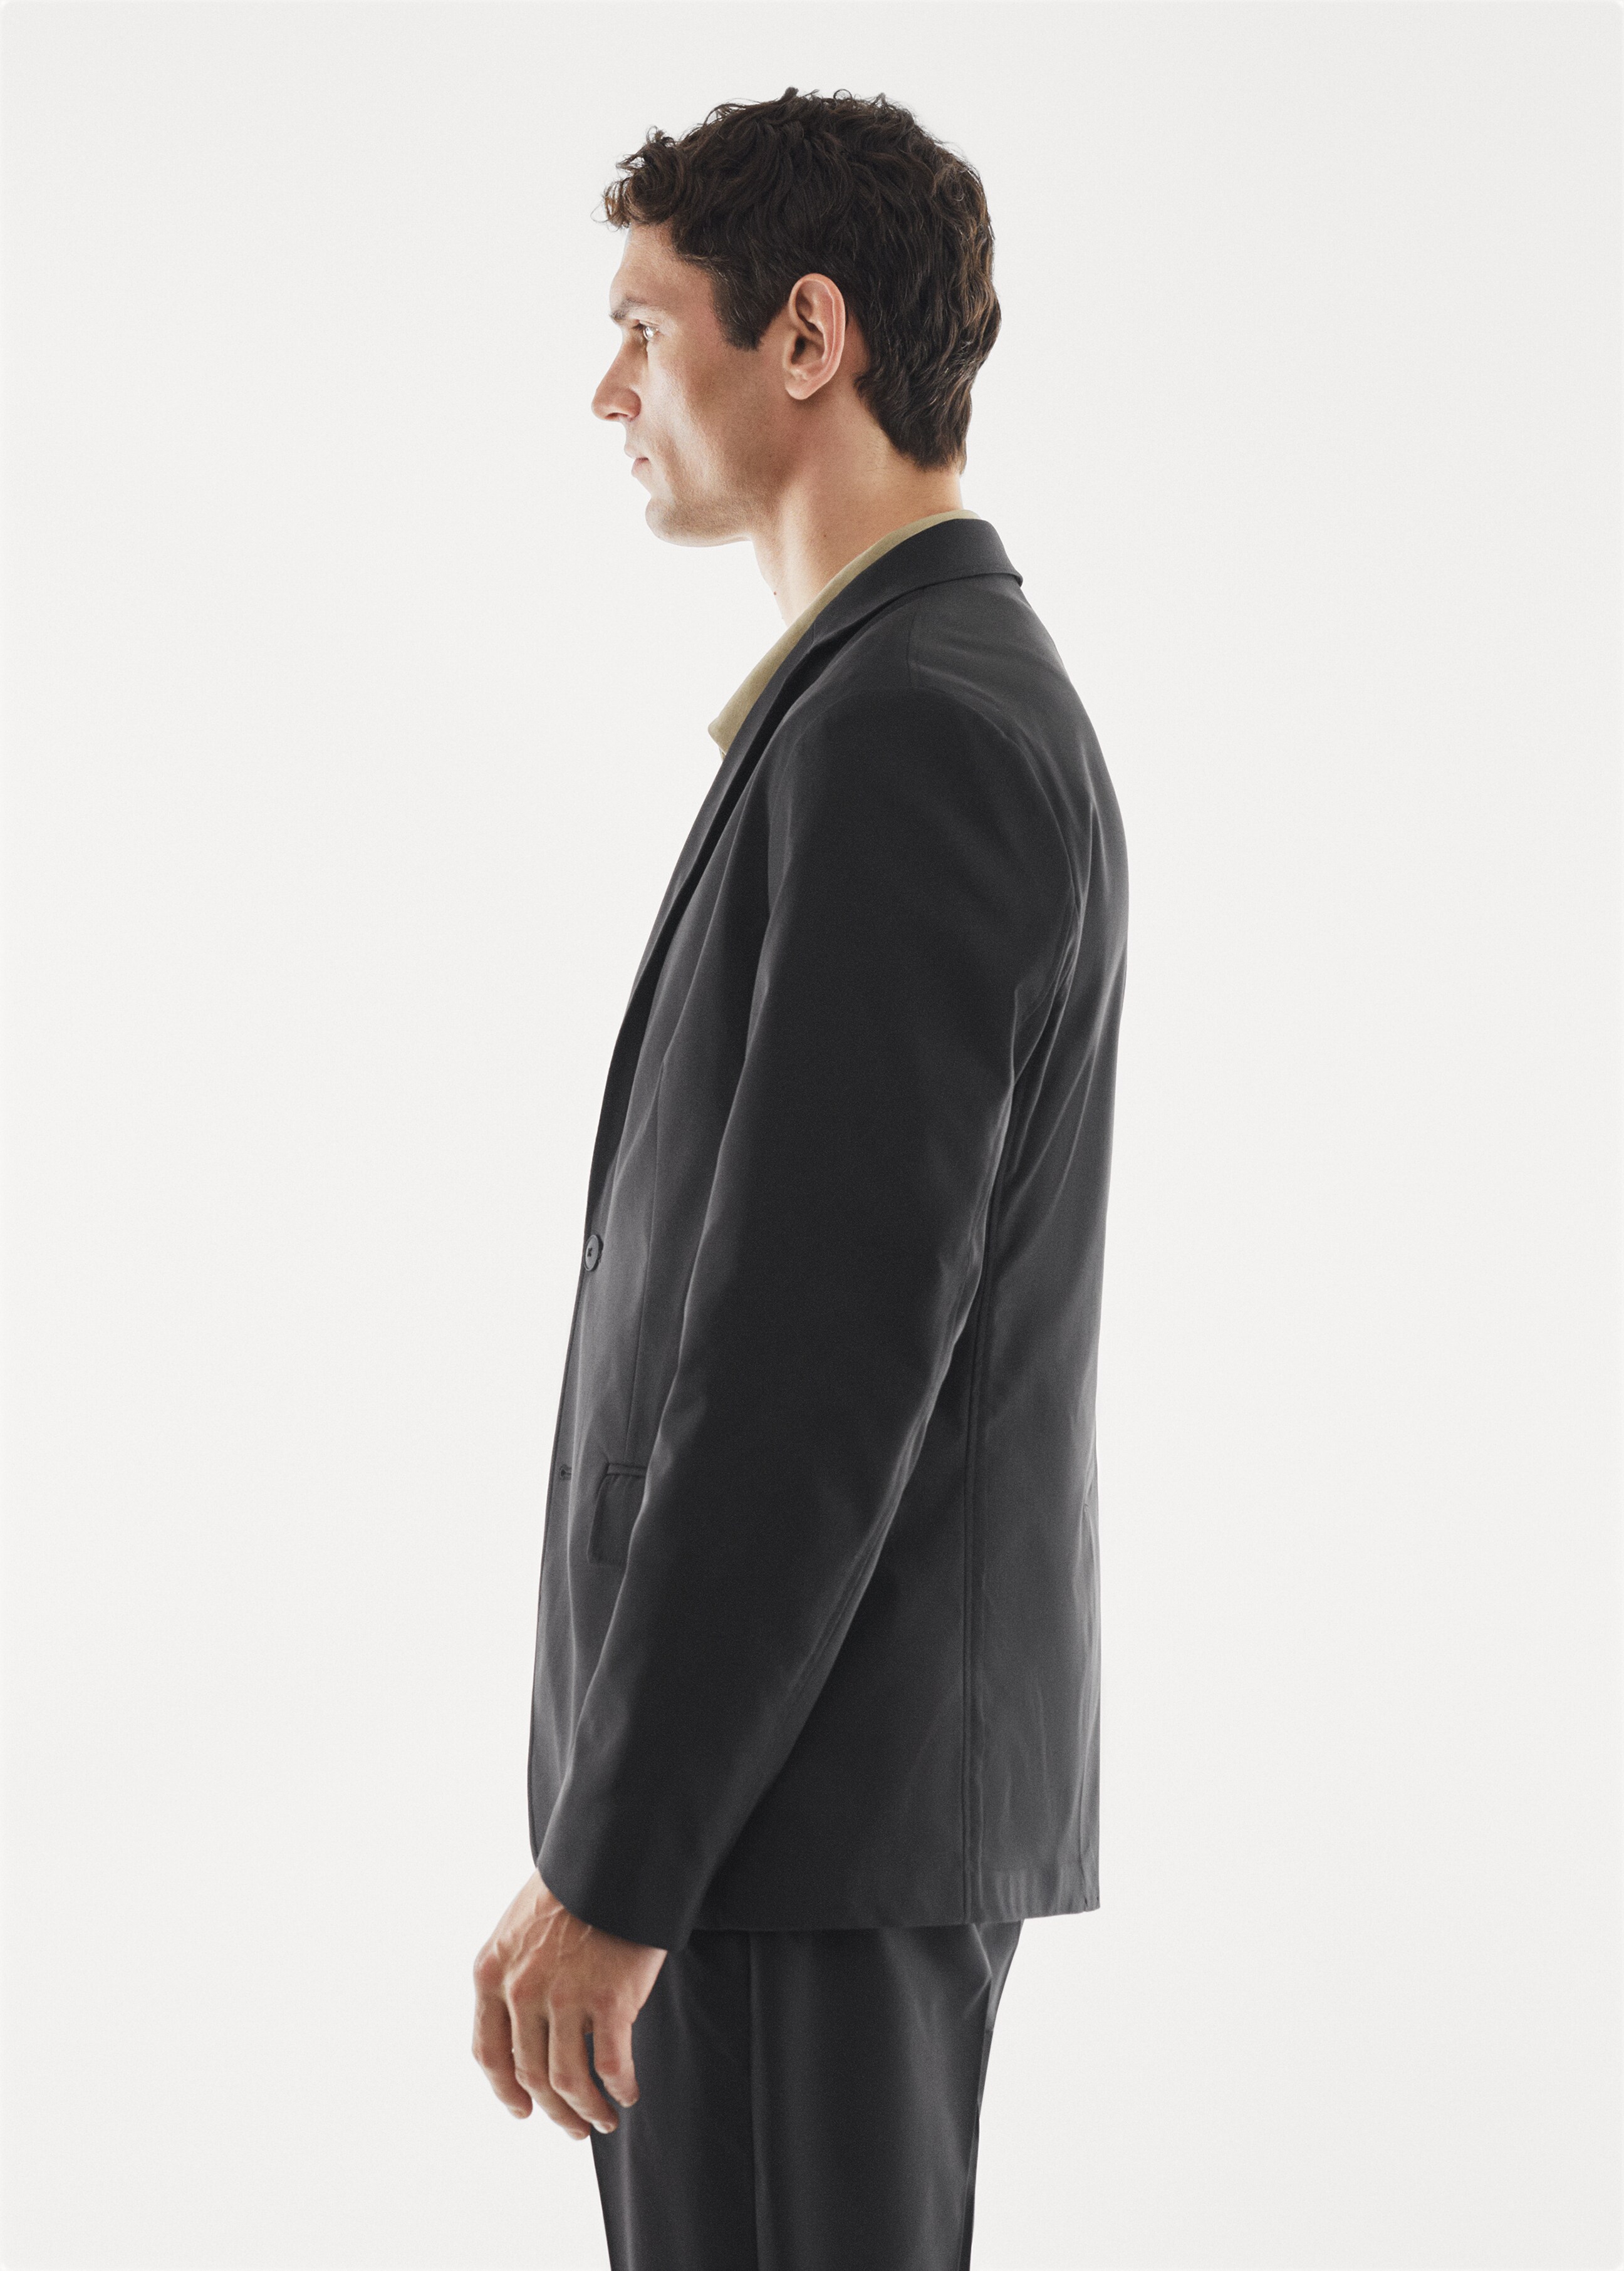 Slim-fit technical suit jacket - Details of the article 6